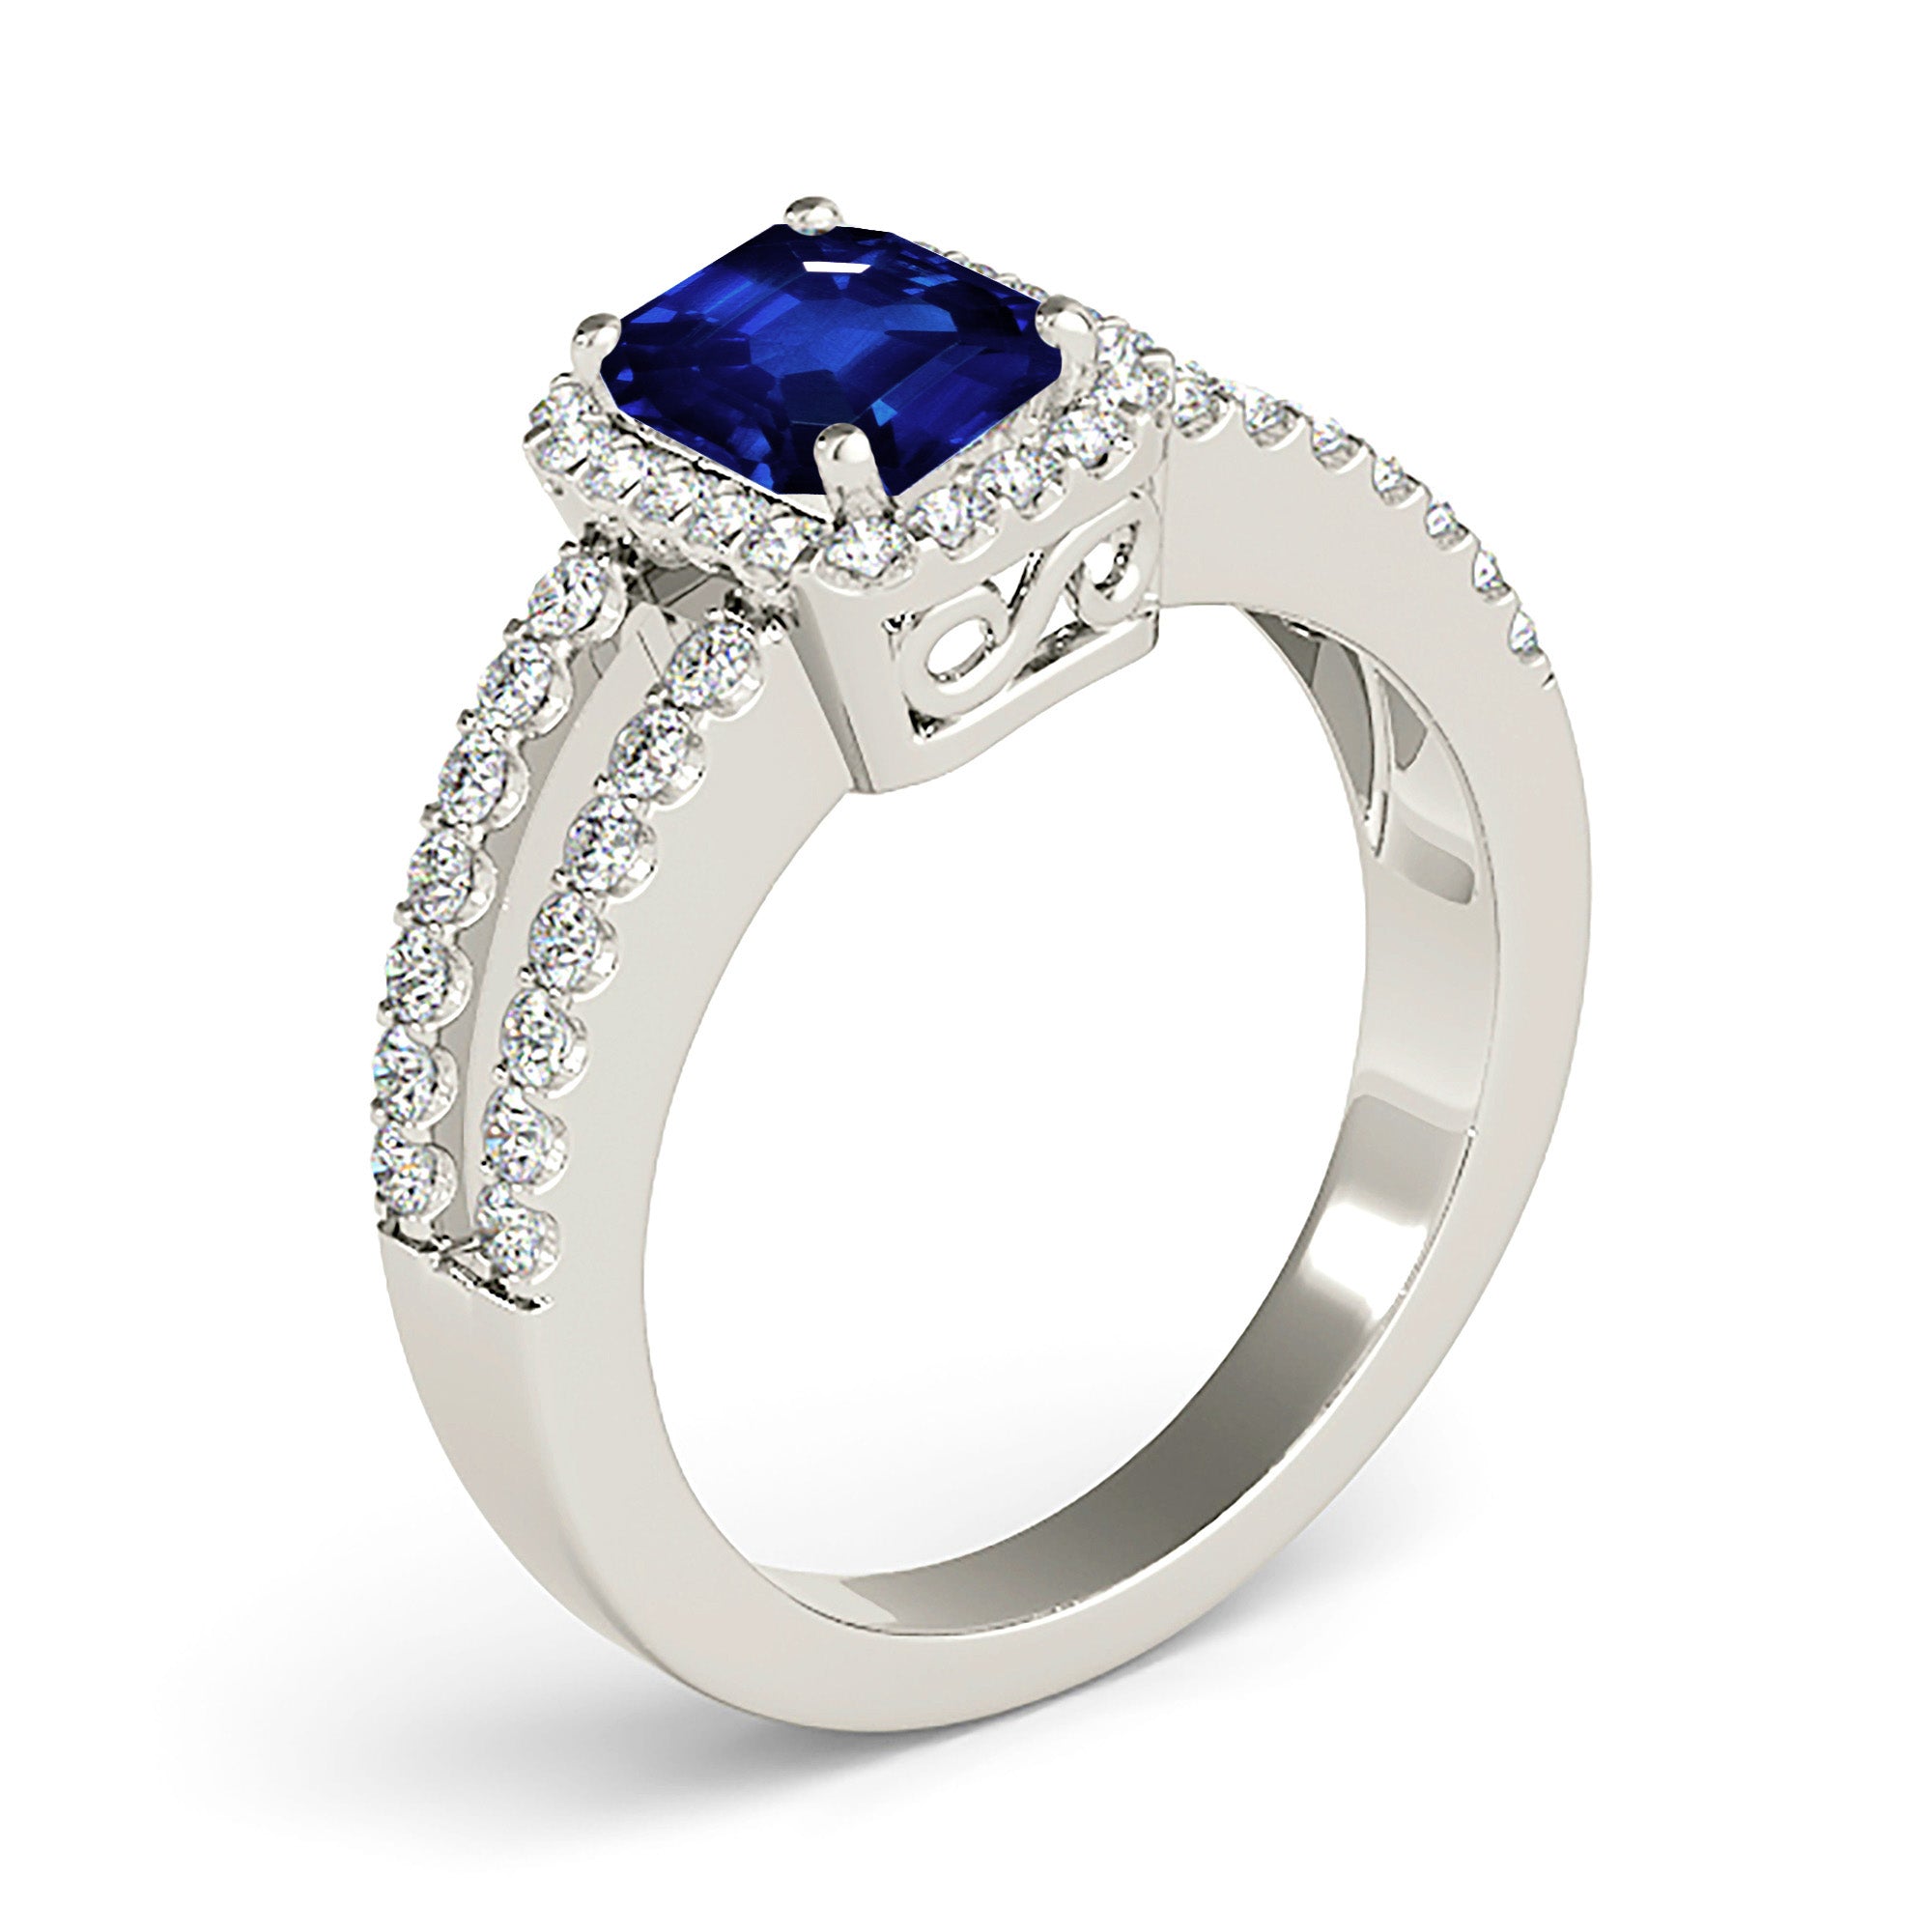 1.15 ct. Genuine Blue Emerald Cut Sapphire Ring With 0.50 ctw. Diamond Halo, Split Open Diamond Shank | Natural Sapphire And Diamond Ring-in 14K/18K White, Yellow, Rose Gold and Platinum - Christmas Jewelry Gift -VIRABYANI